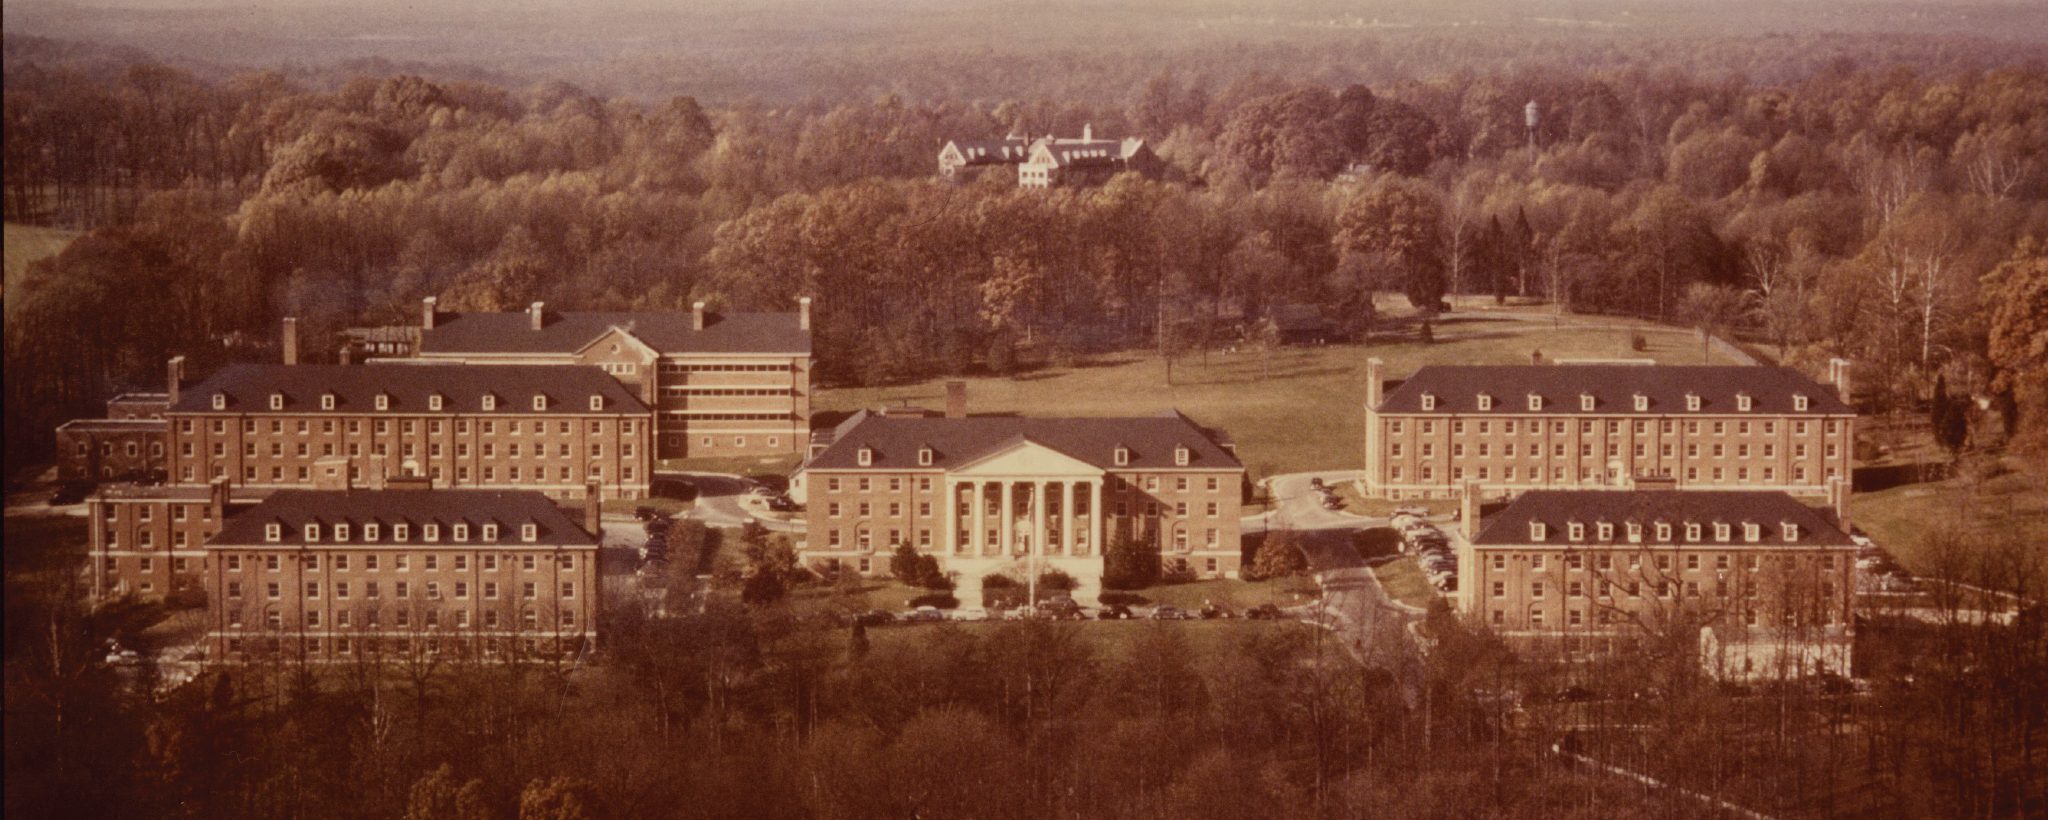 sepia toned photo of the NIH Campus